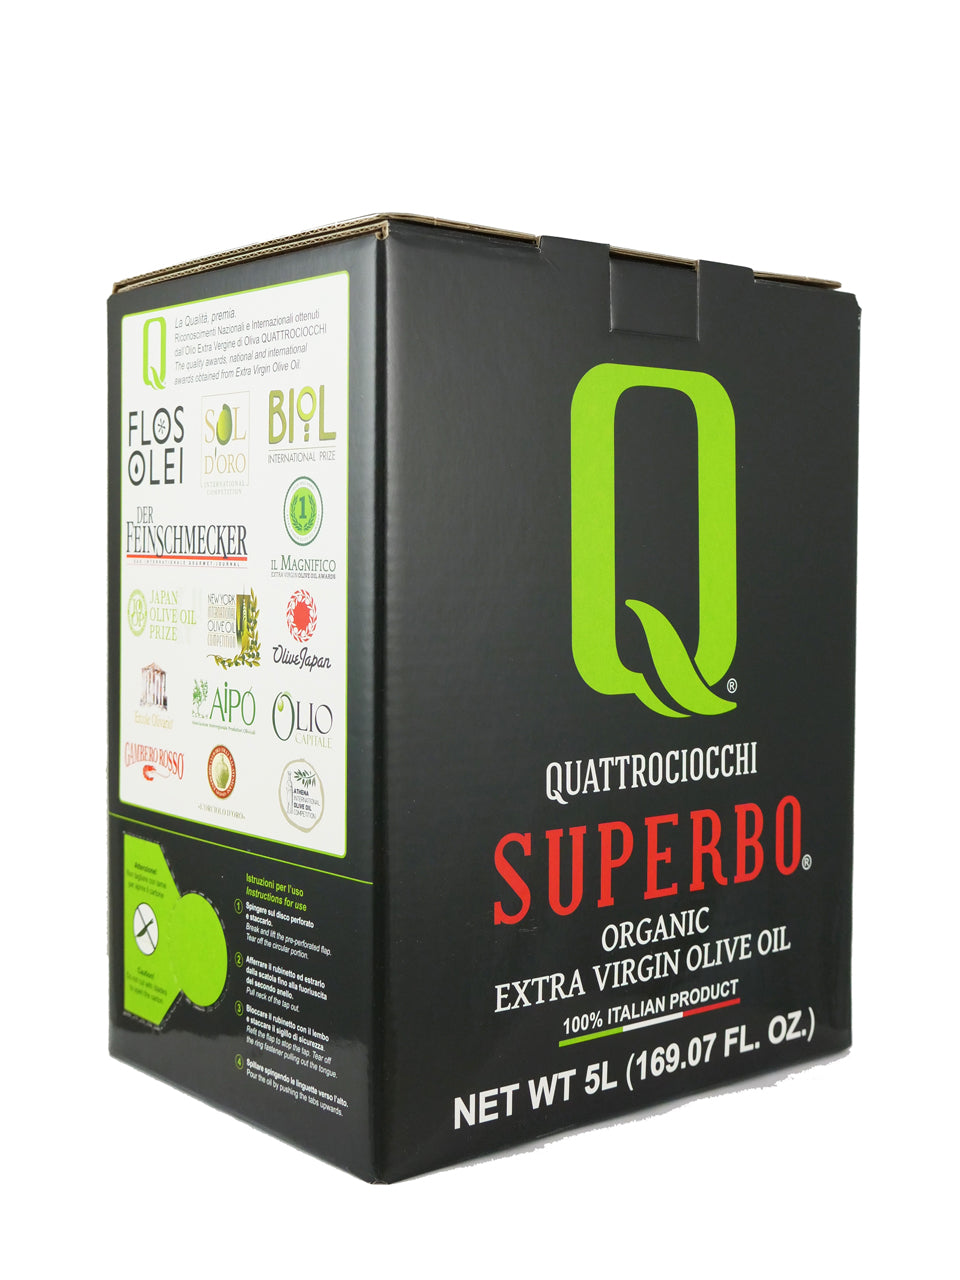 Quattrociocchi Superbo Organic 5L Bag-in-Box